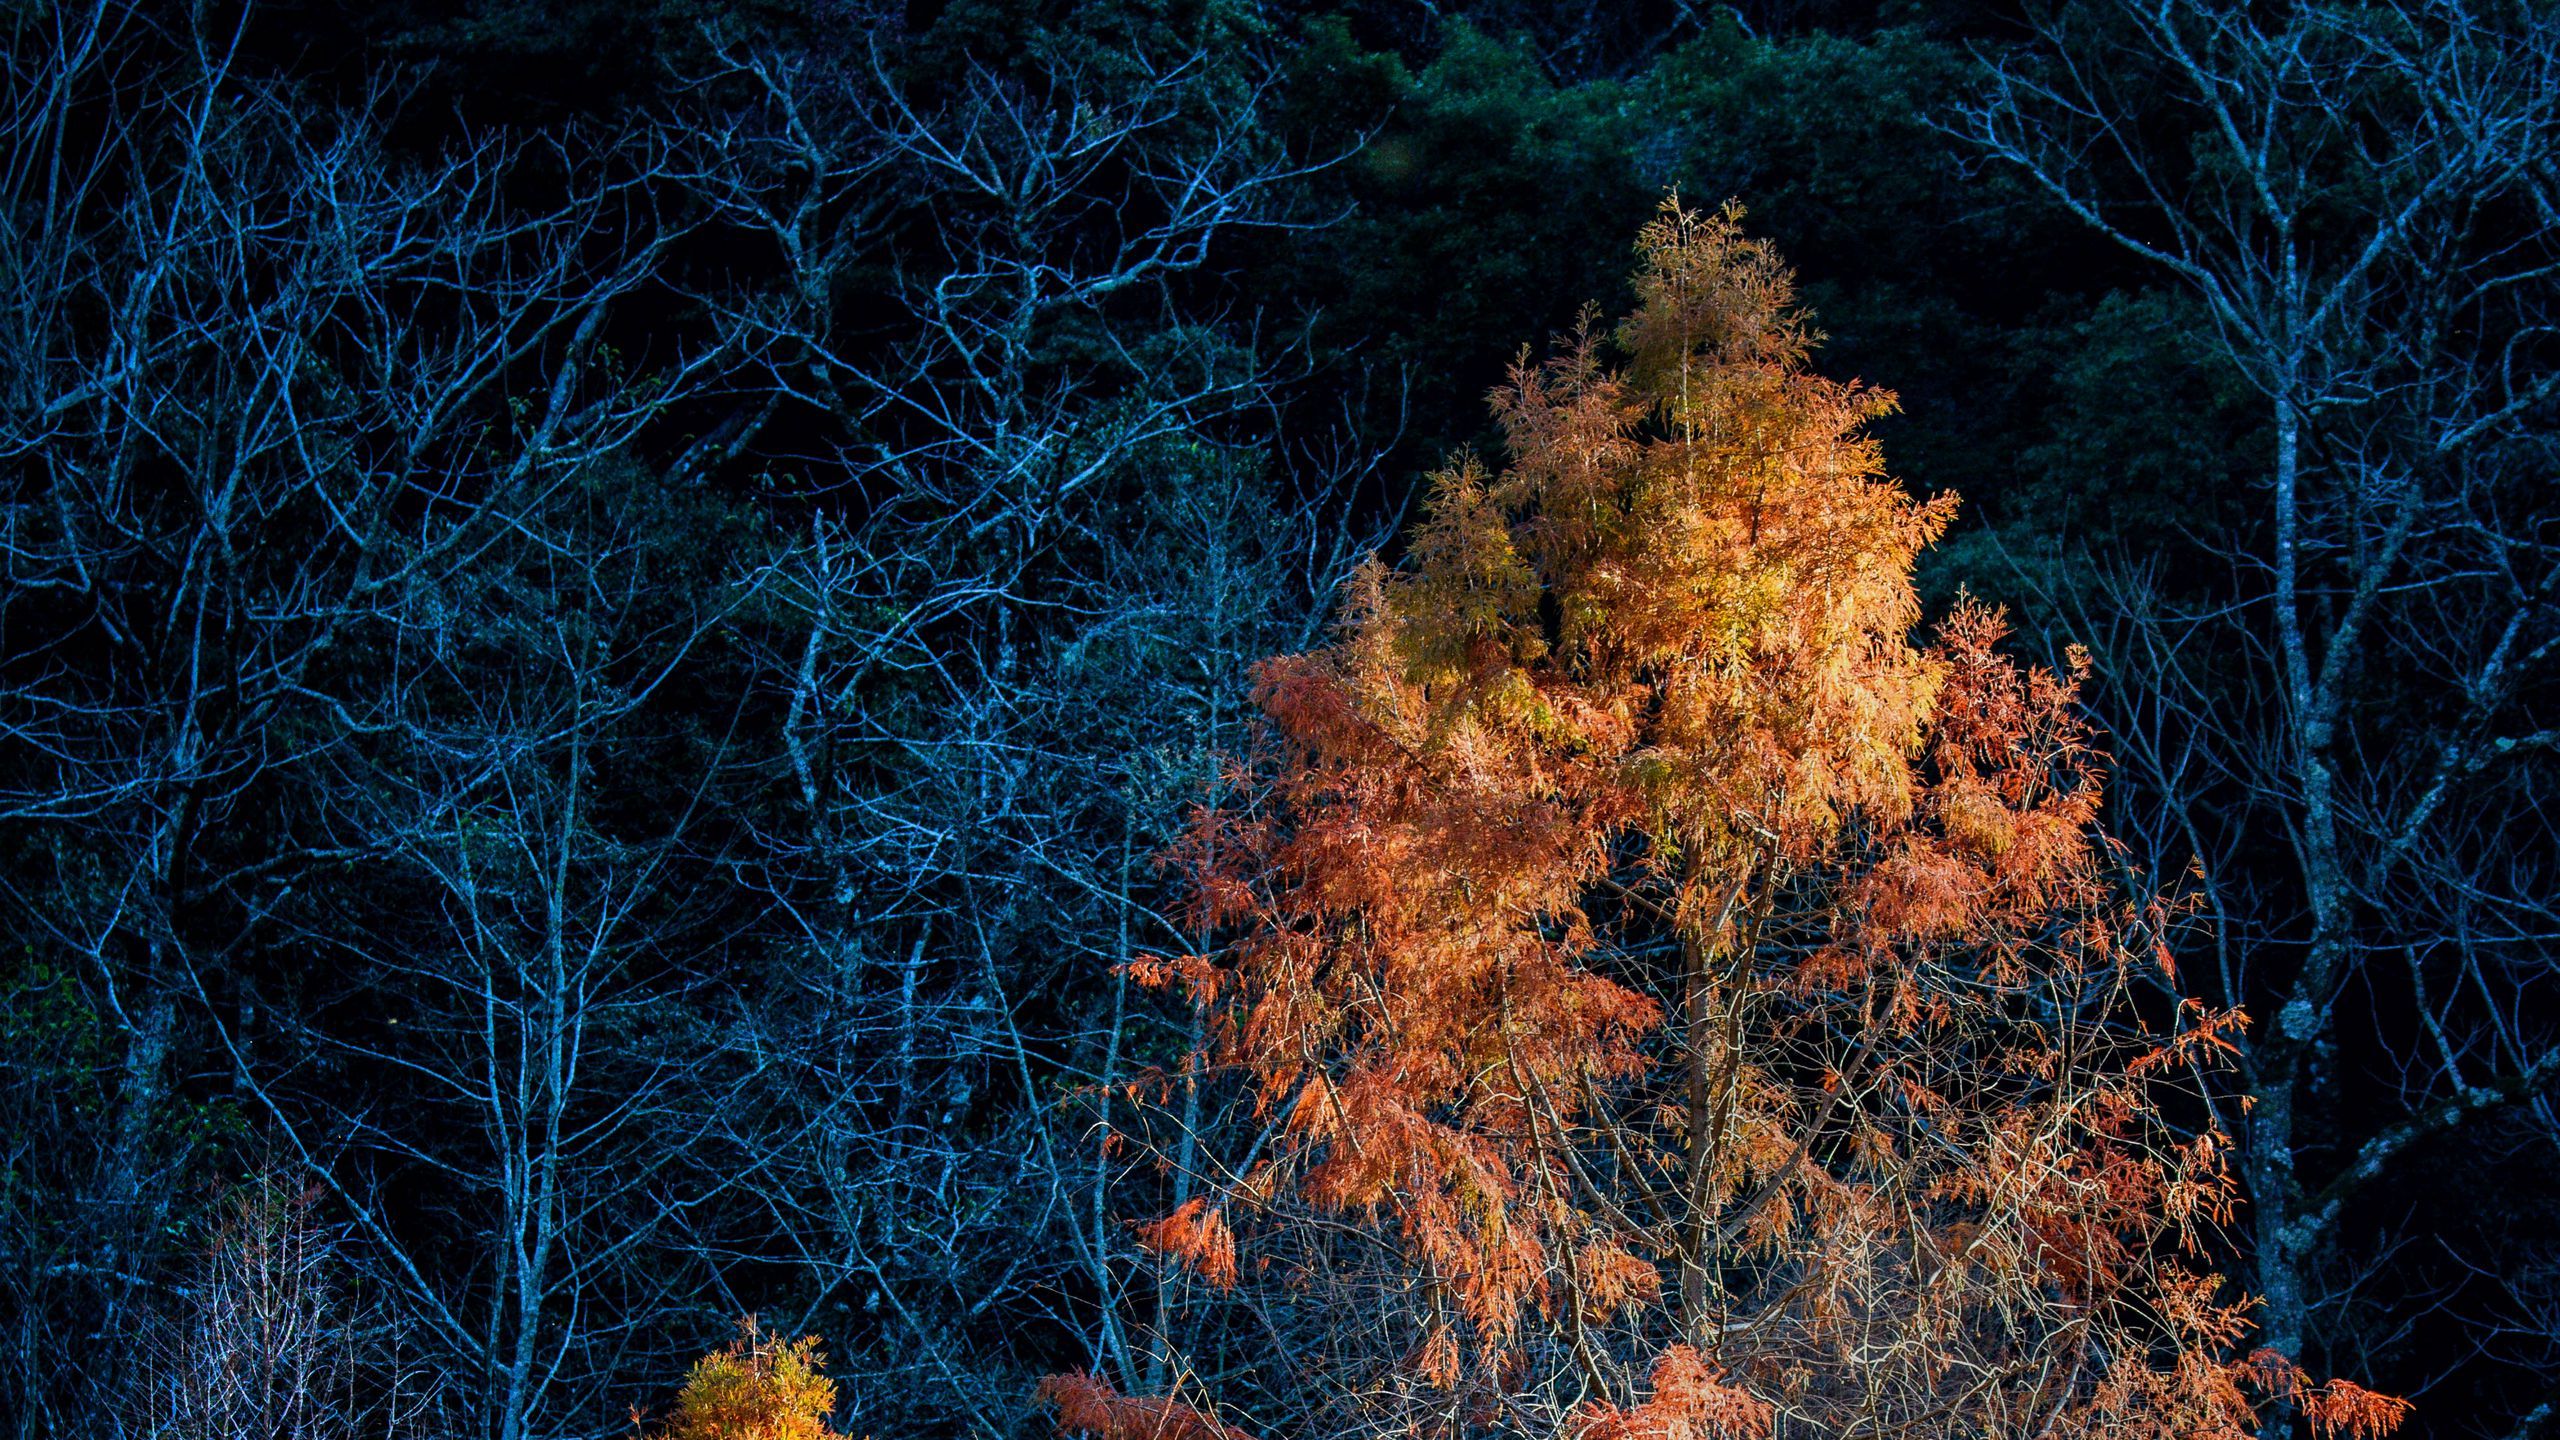 Download wallpaper 2560x1440 trees, autumn, dark, branches widescreen 16:9 HD background